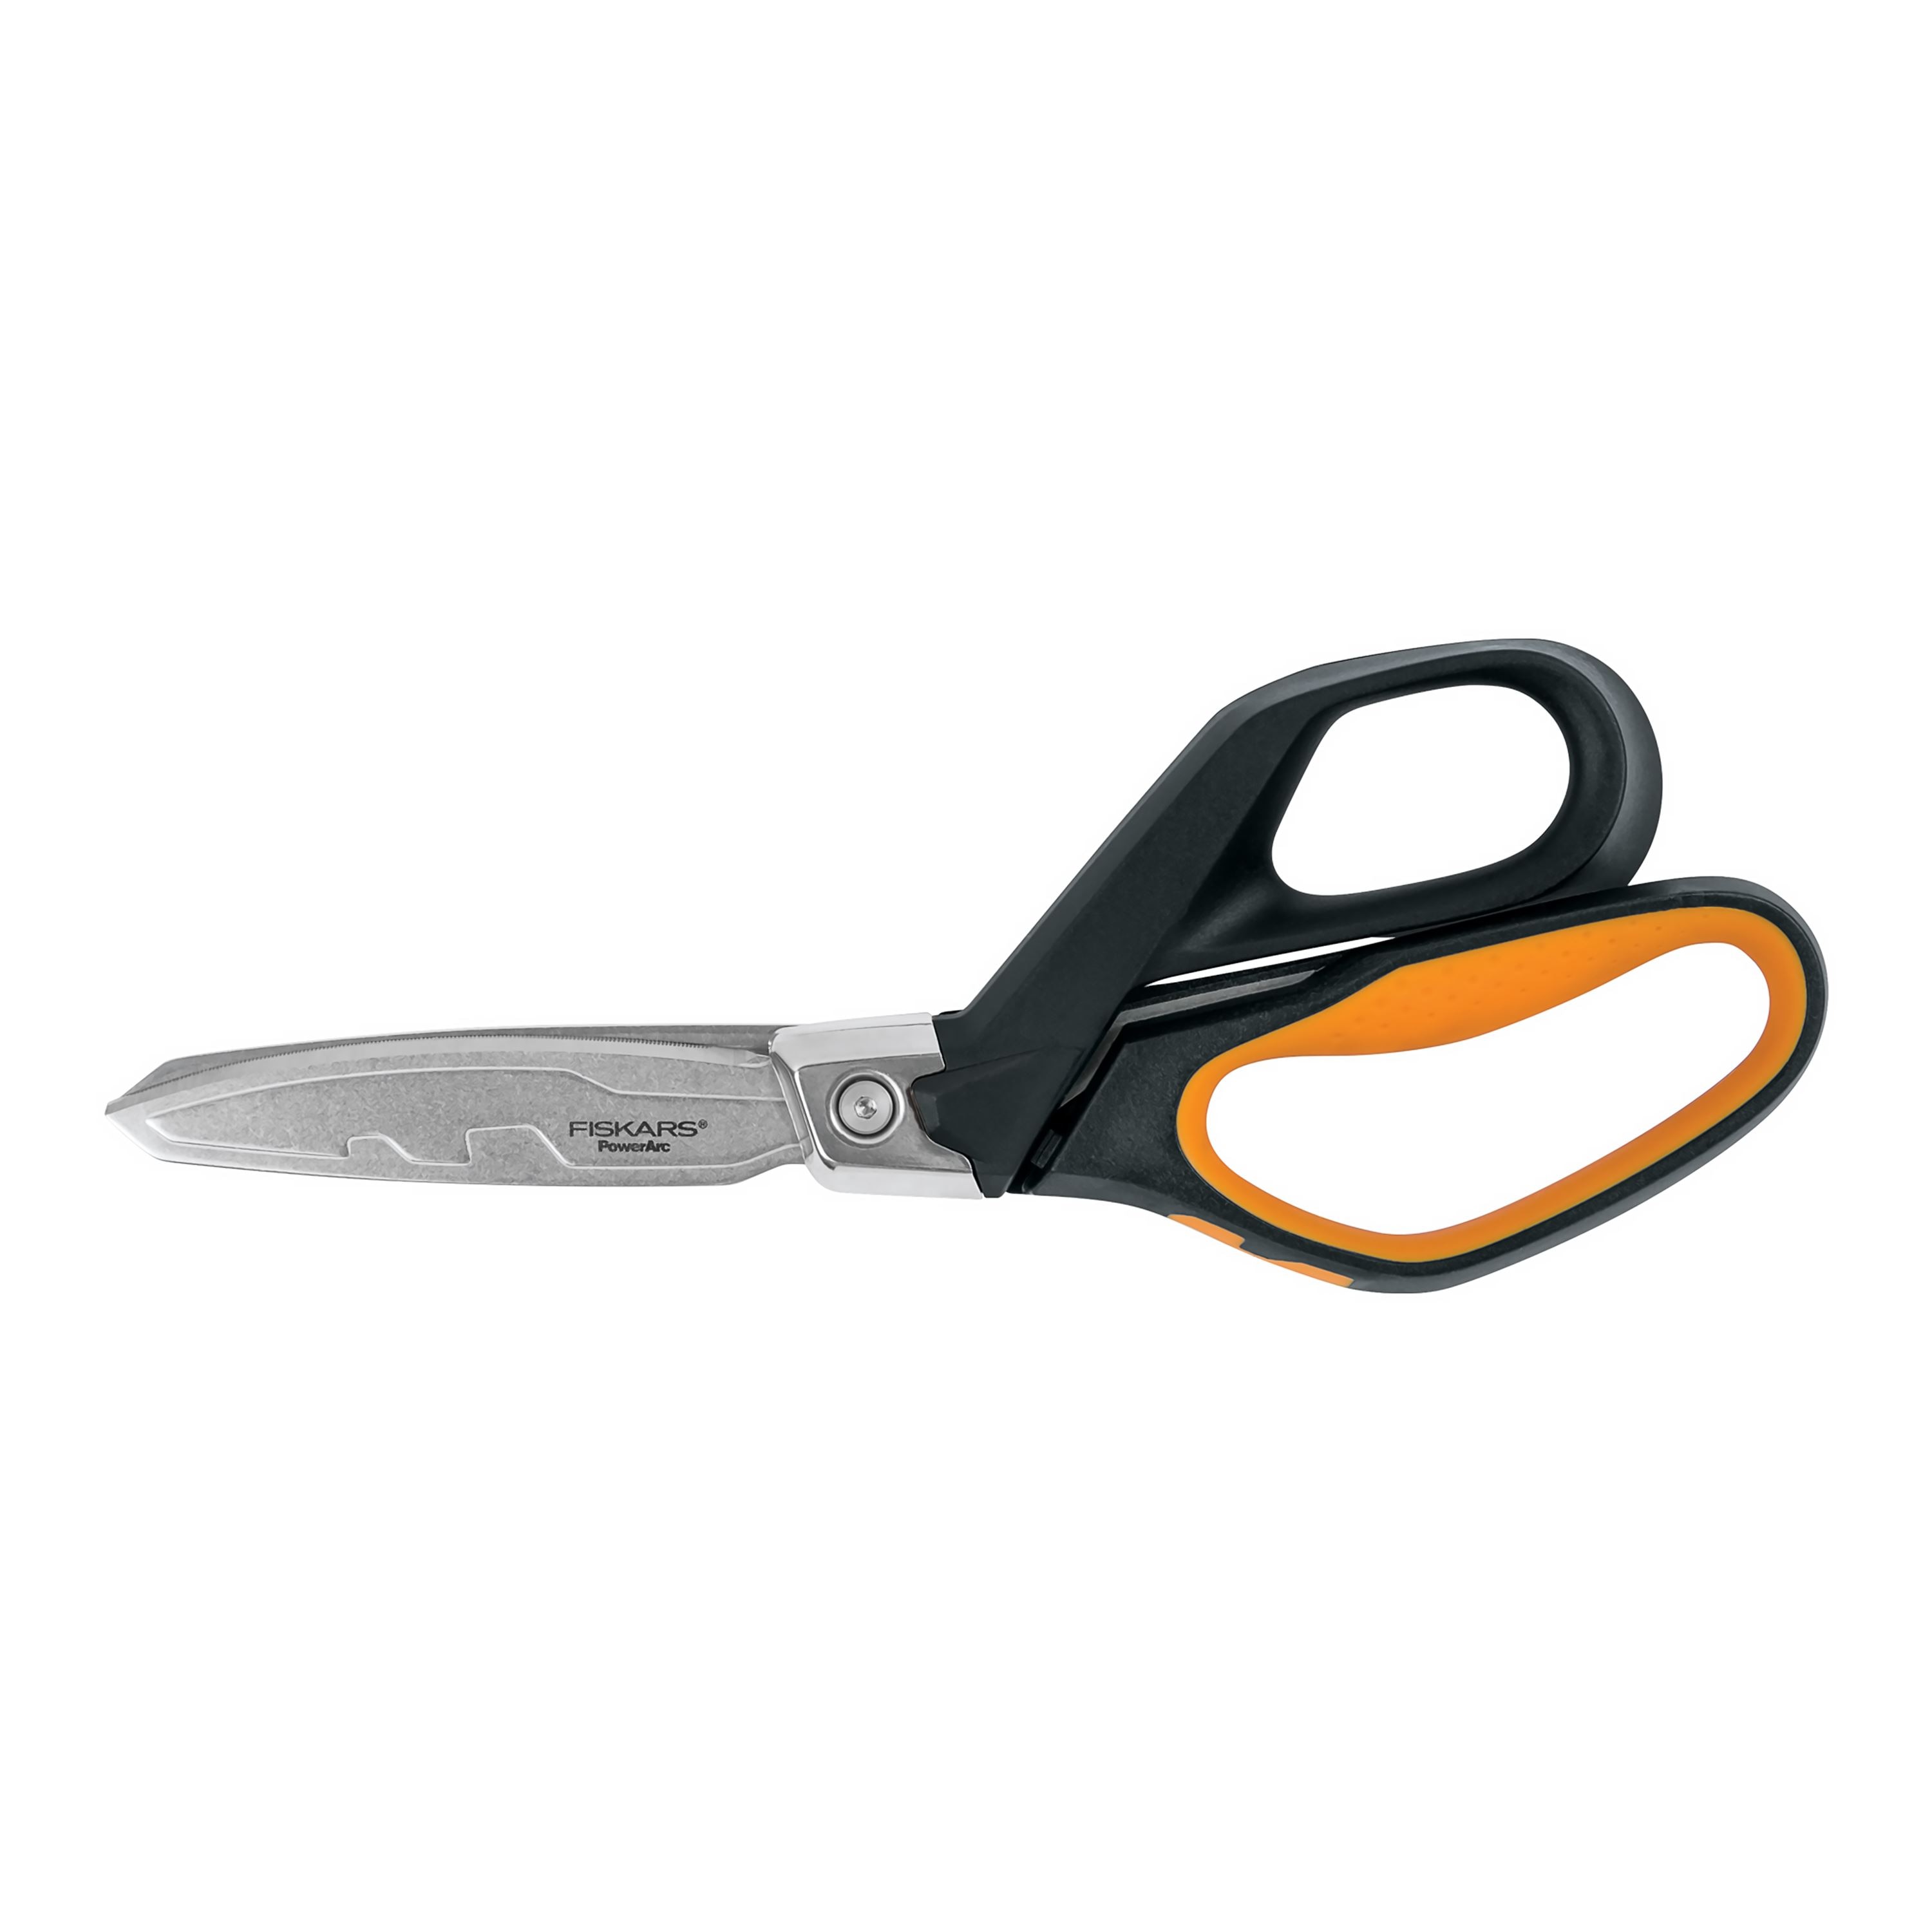  Fiskars Pro PowerArc Shears - 10 Heavy Duty Scissors -  Building and Construction Tools - Orange/Black : Office Products